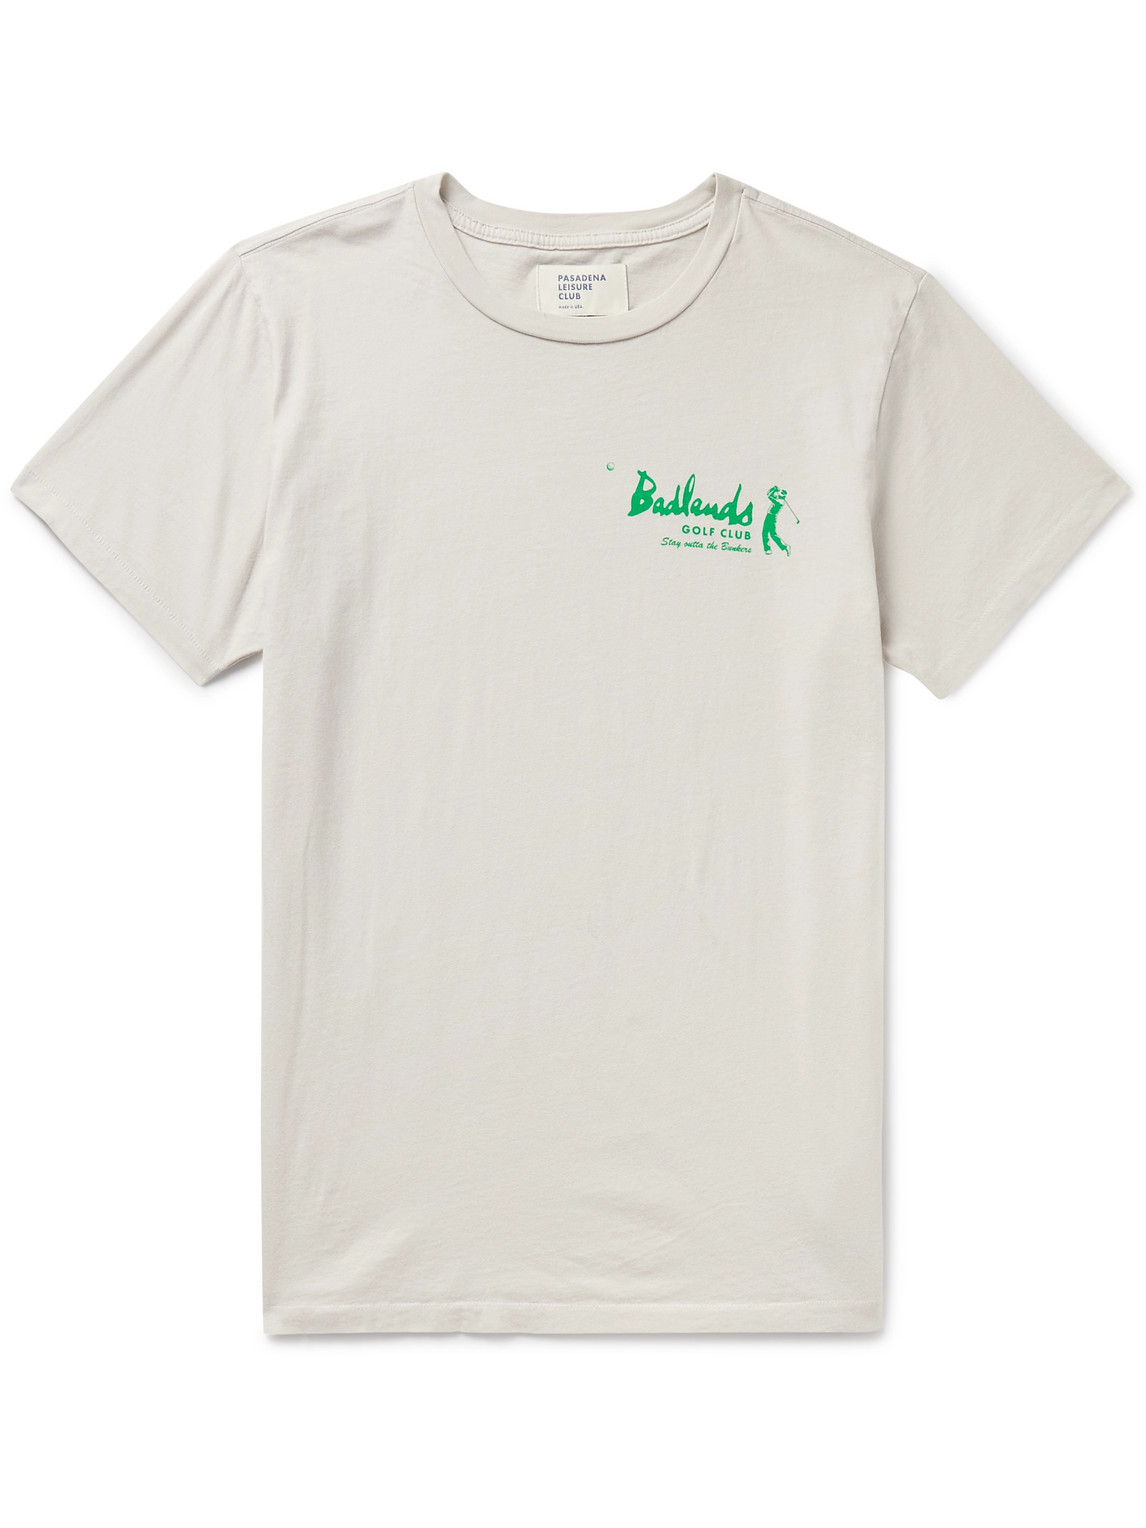 Pasadena Leisure Club Badlands Printed Cotton-jersey T-shirt In Neutrals